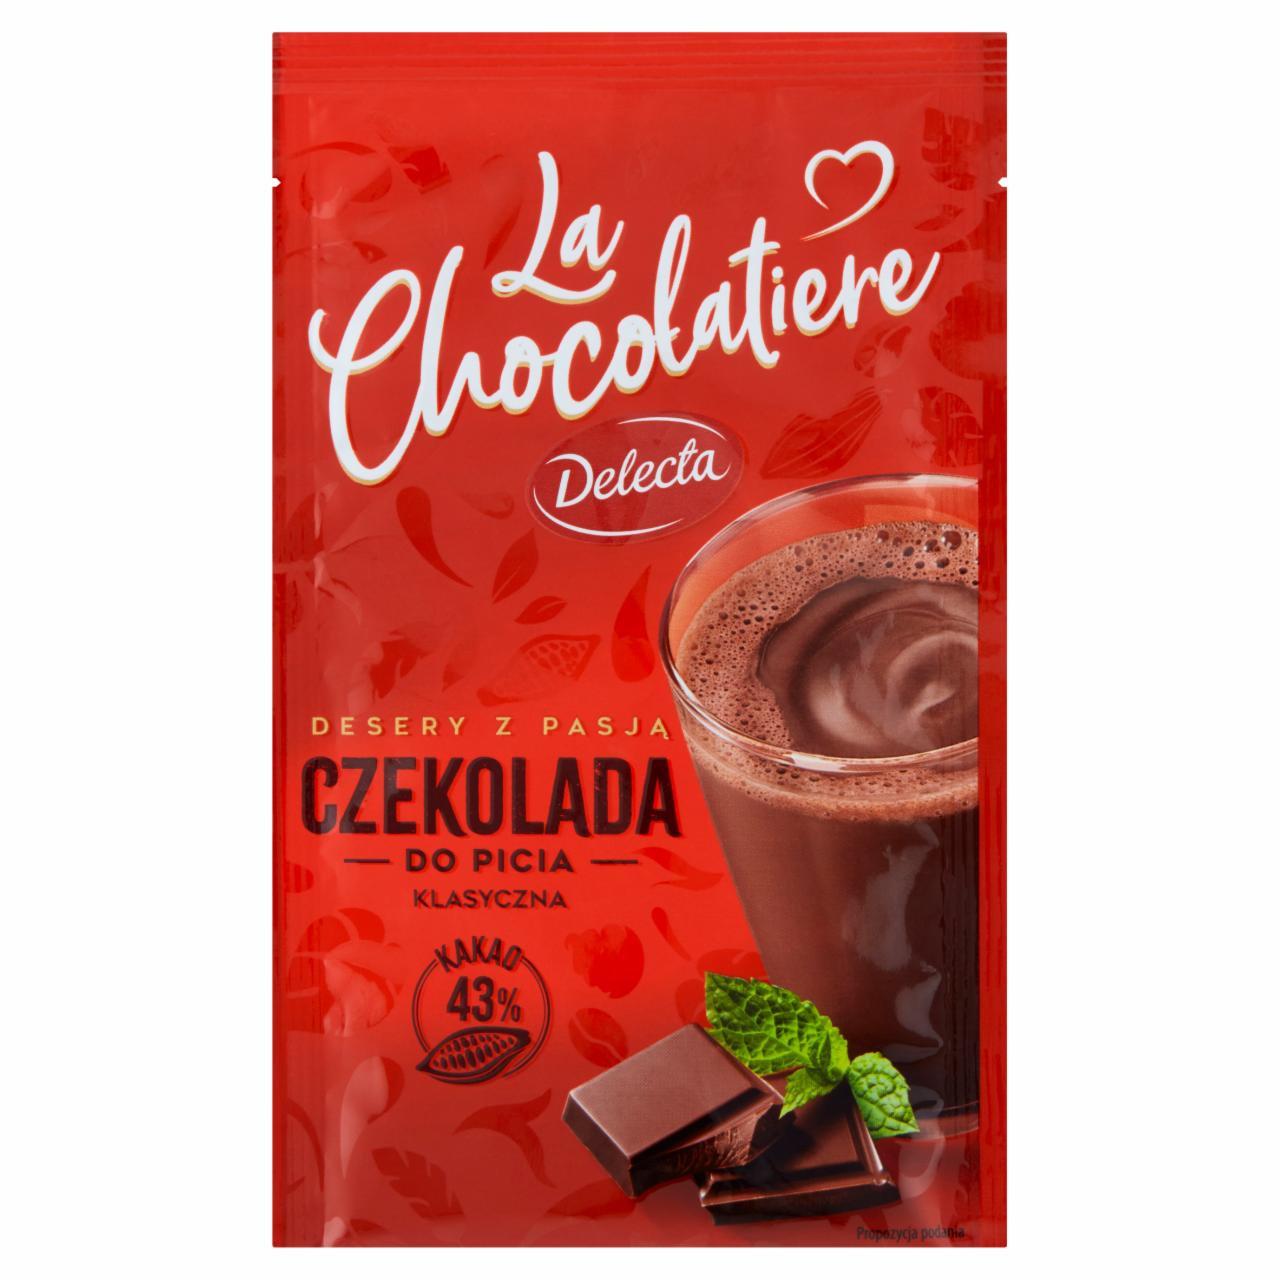 Zdjęcia - Delecta La Chocolatiere Czekolada do picia klasyczna 30 g